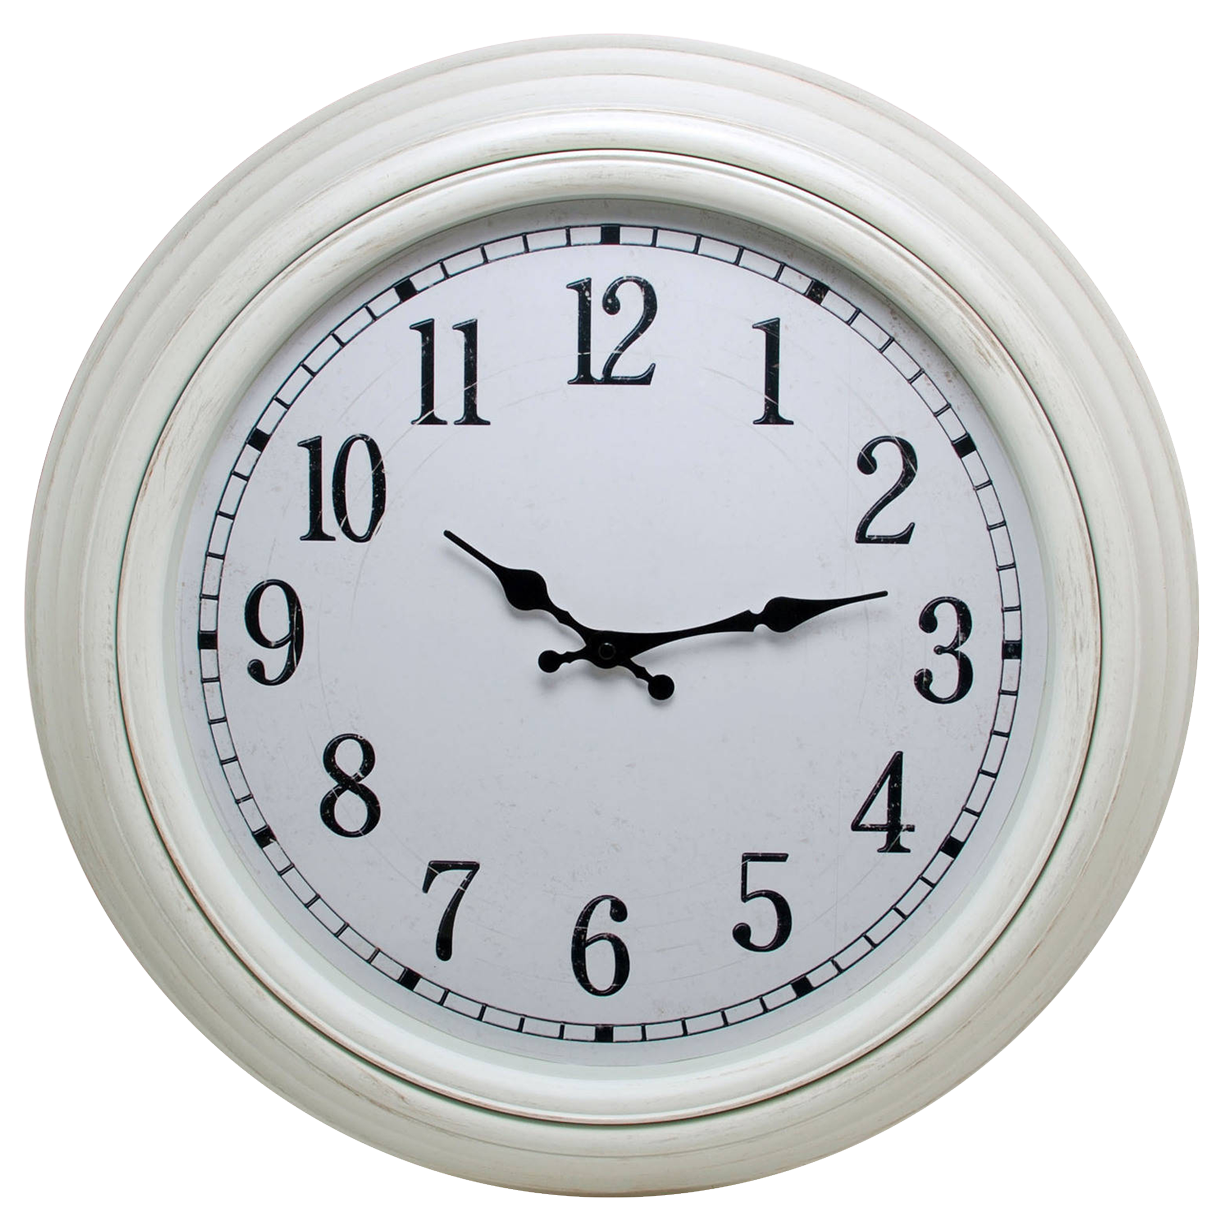 White Wall Clock PNG Image - PurePNG | Free transparent ...